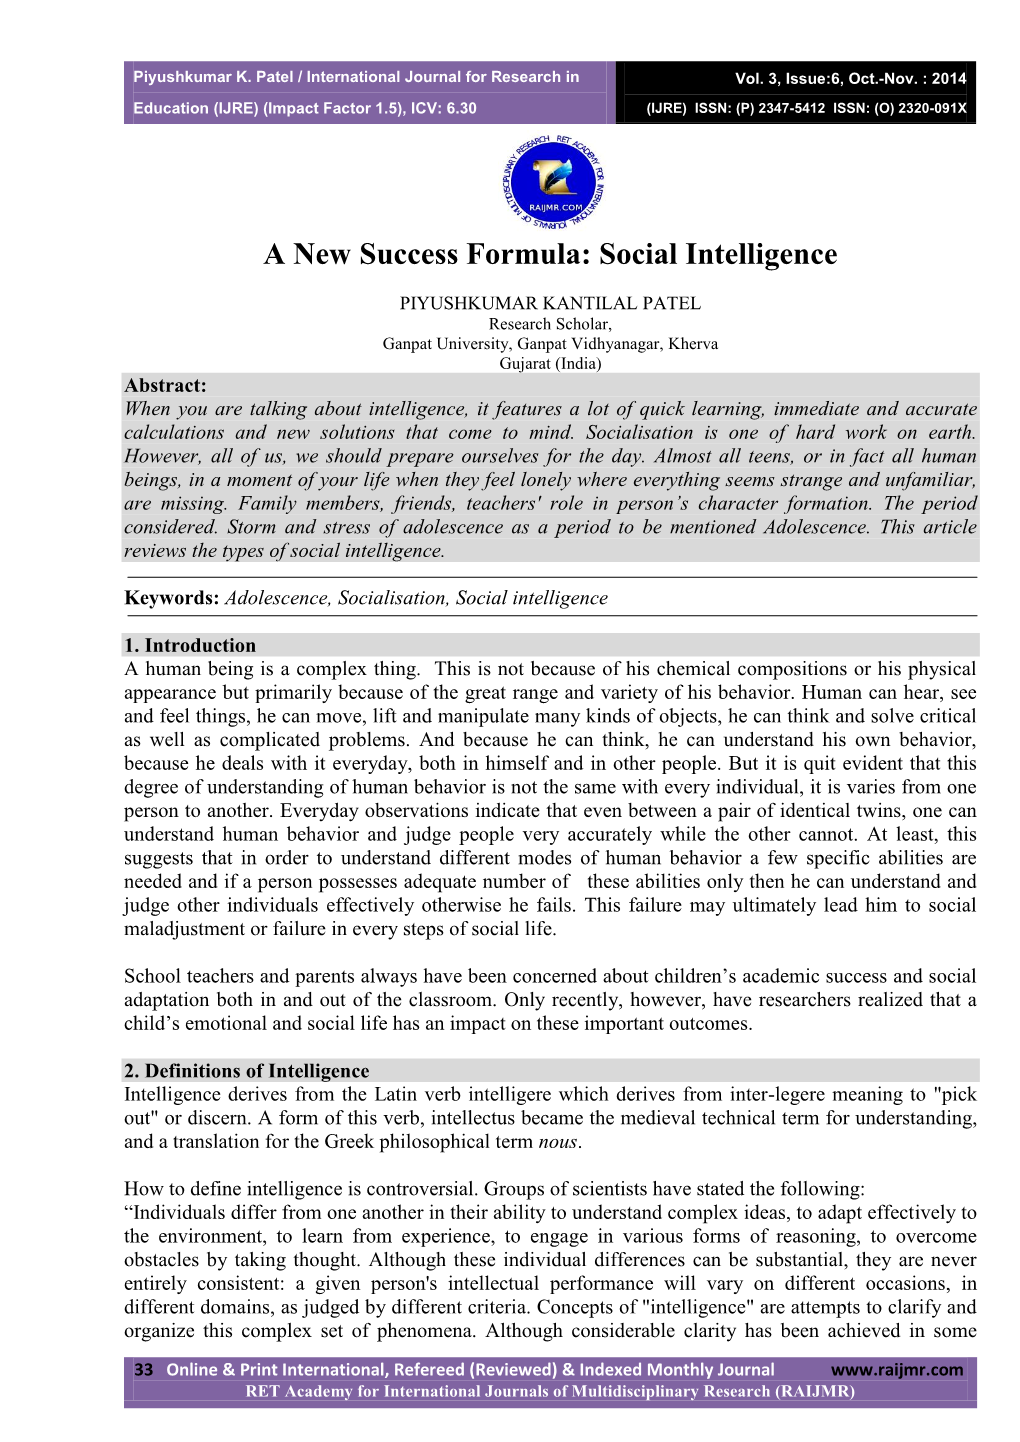 A New Success Formula: Social Intelligence